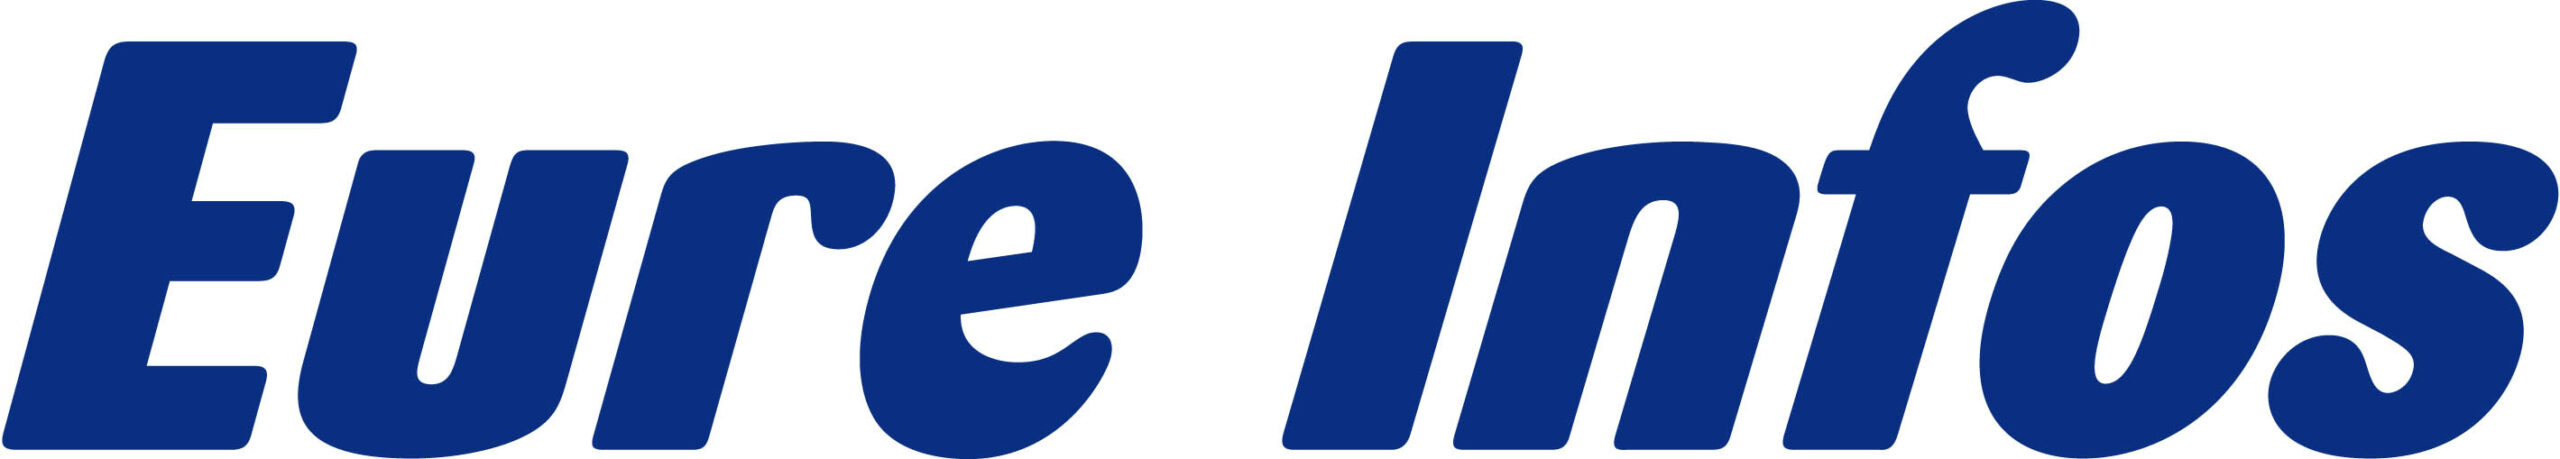 Eure info logo